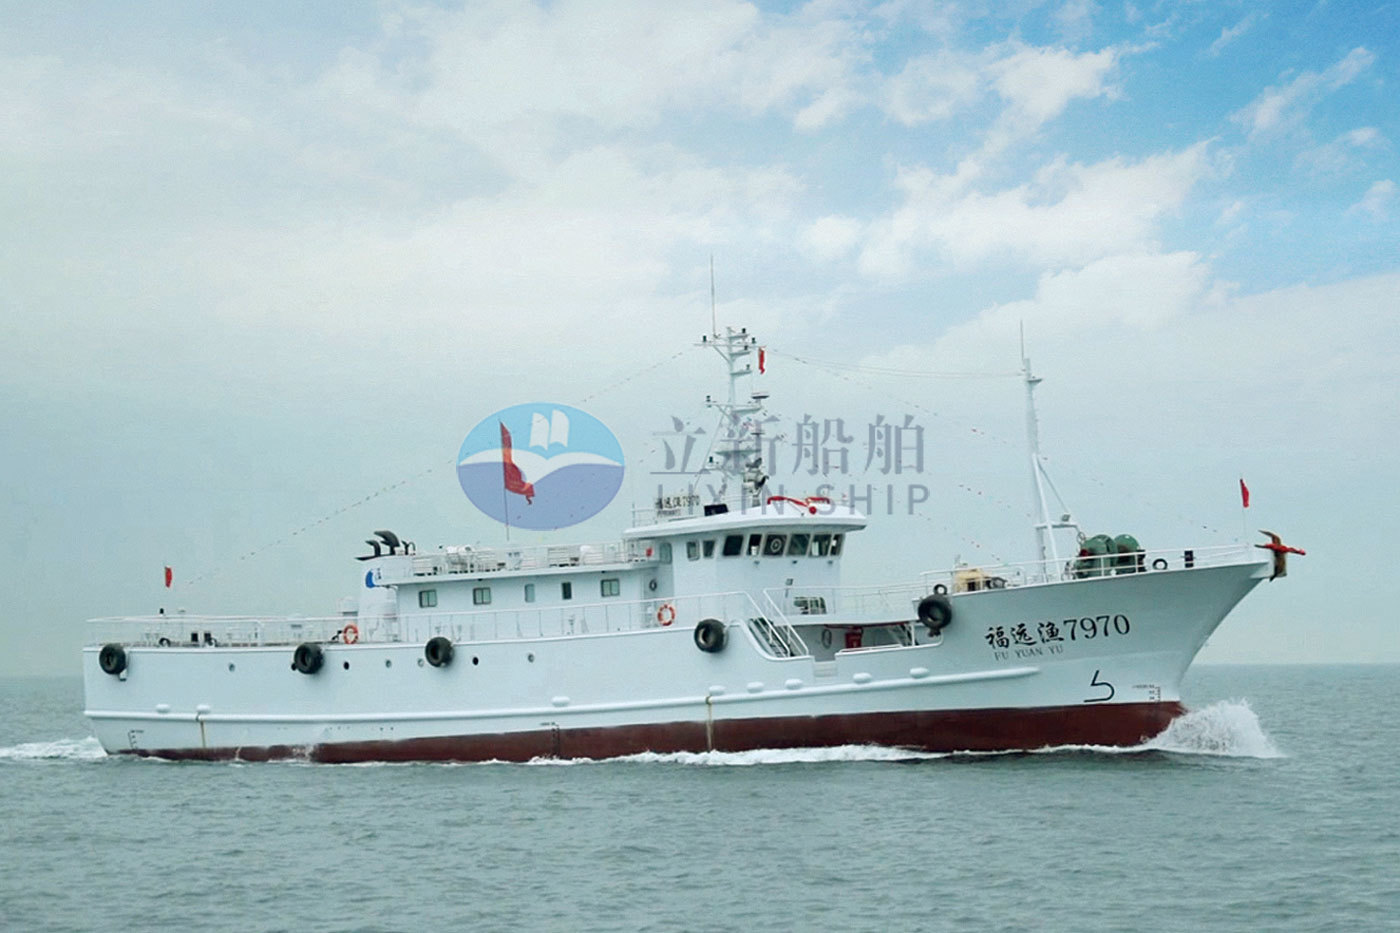 48.8-meter single-machine single-slurry ocean-going longline fishing vessel